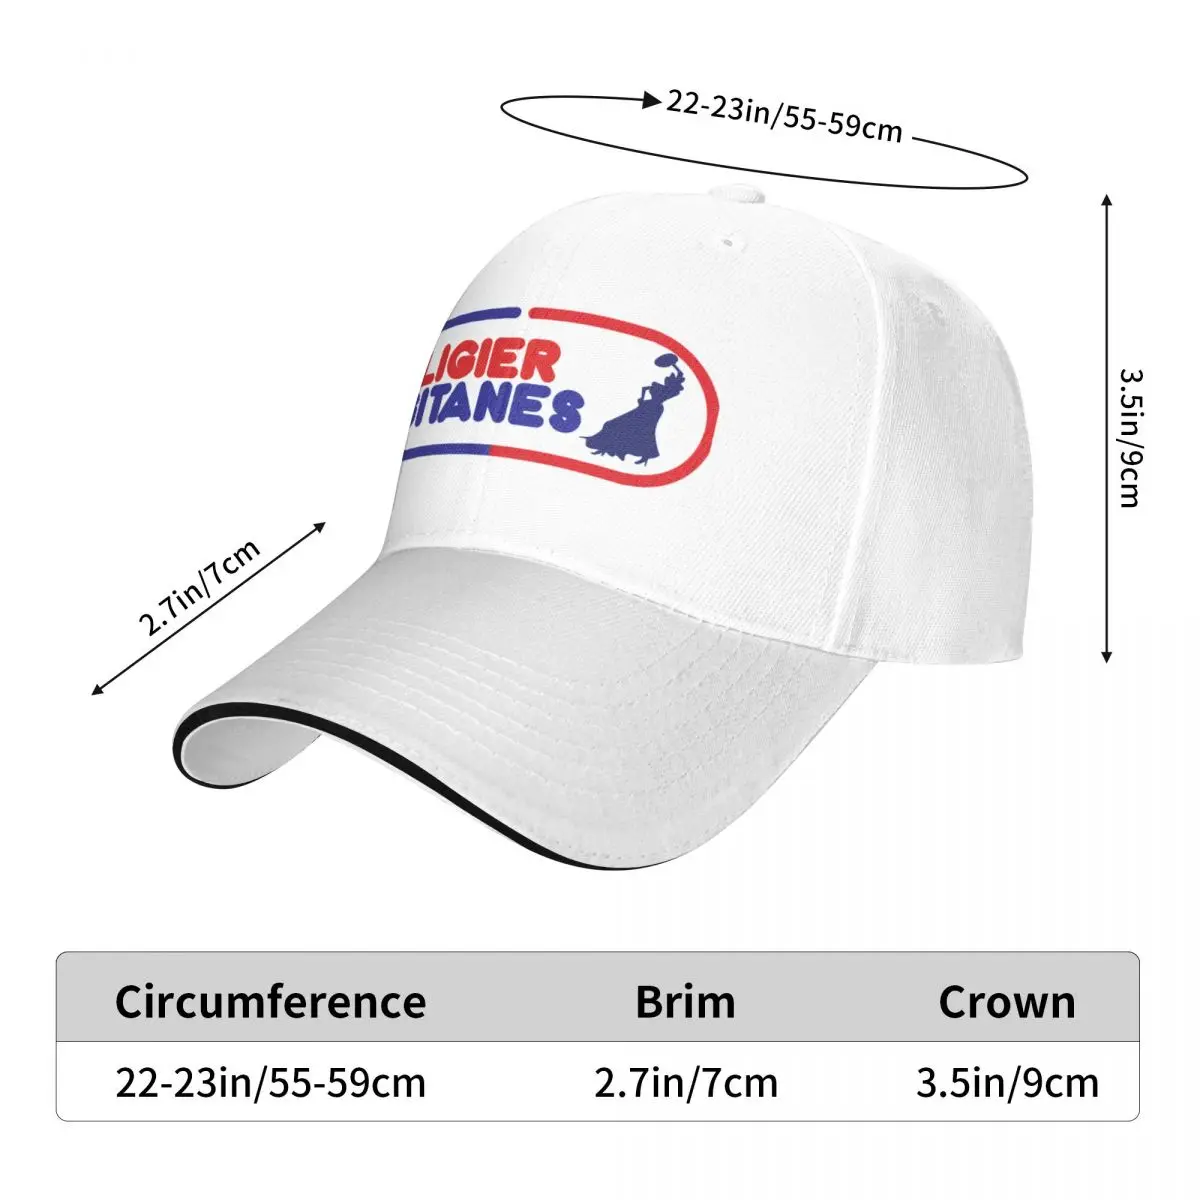 Ligier Gitanes Logotipo Gorra de Béisbol Sombrero de Sol Para Niños Caballo Sombrero de los Hombres Gorras de Mujer . ' - ' . 5